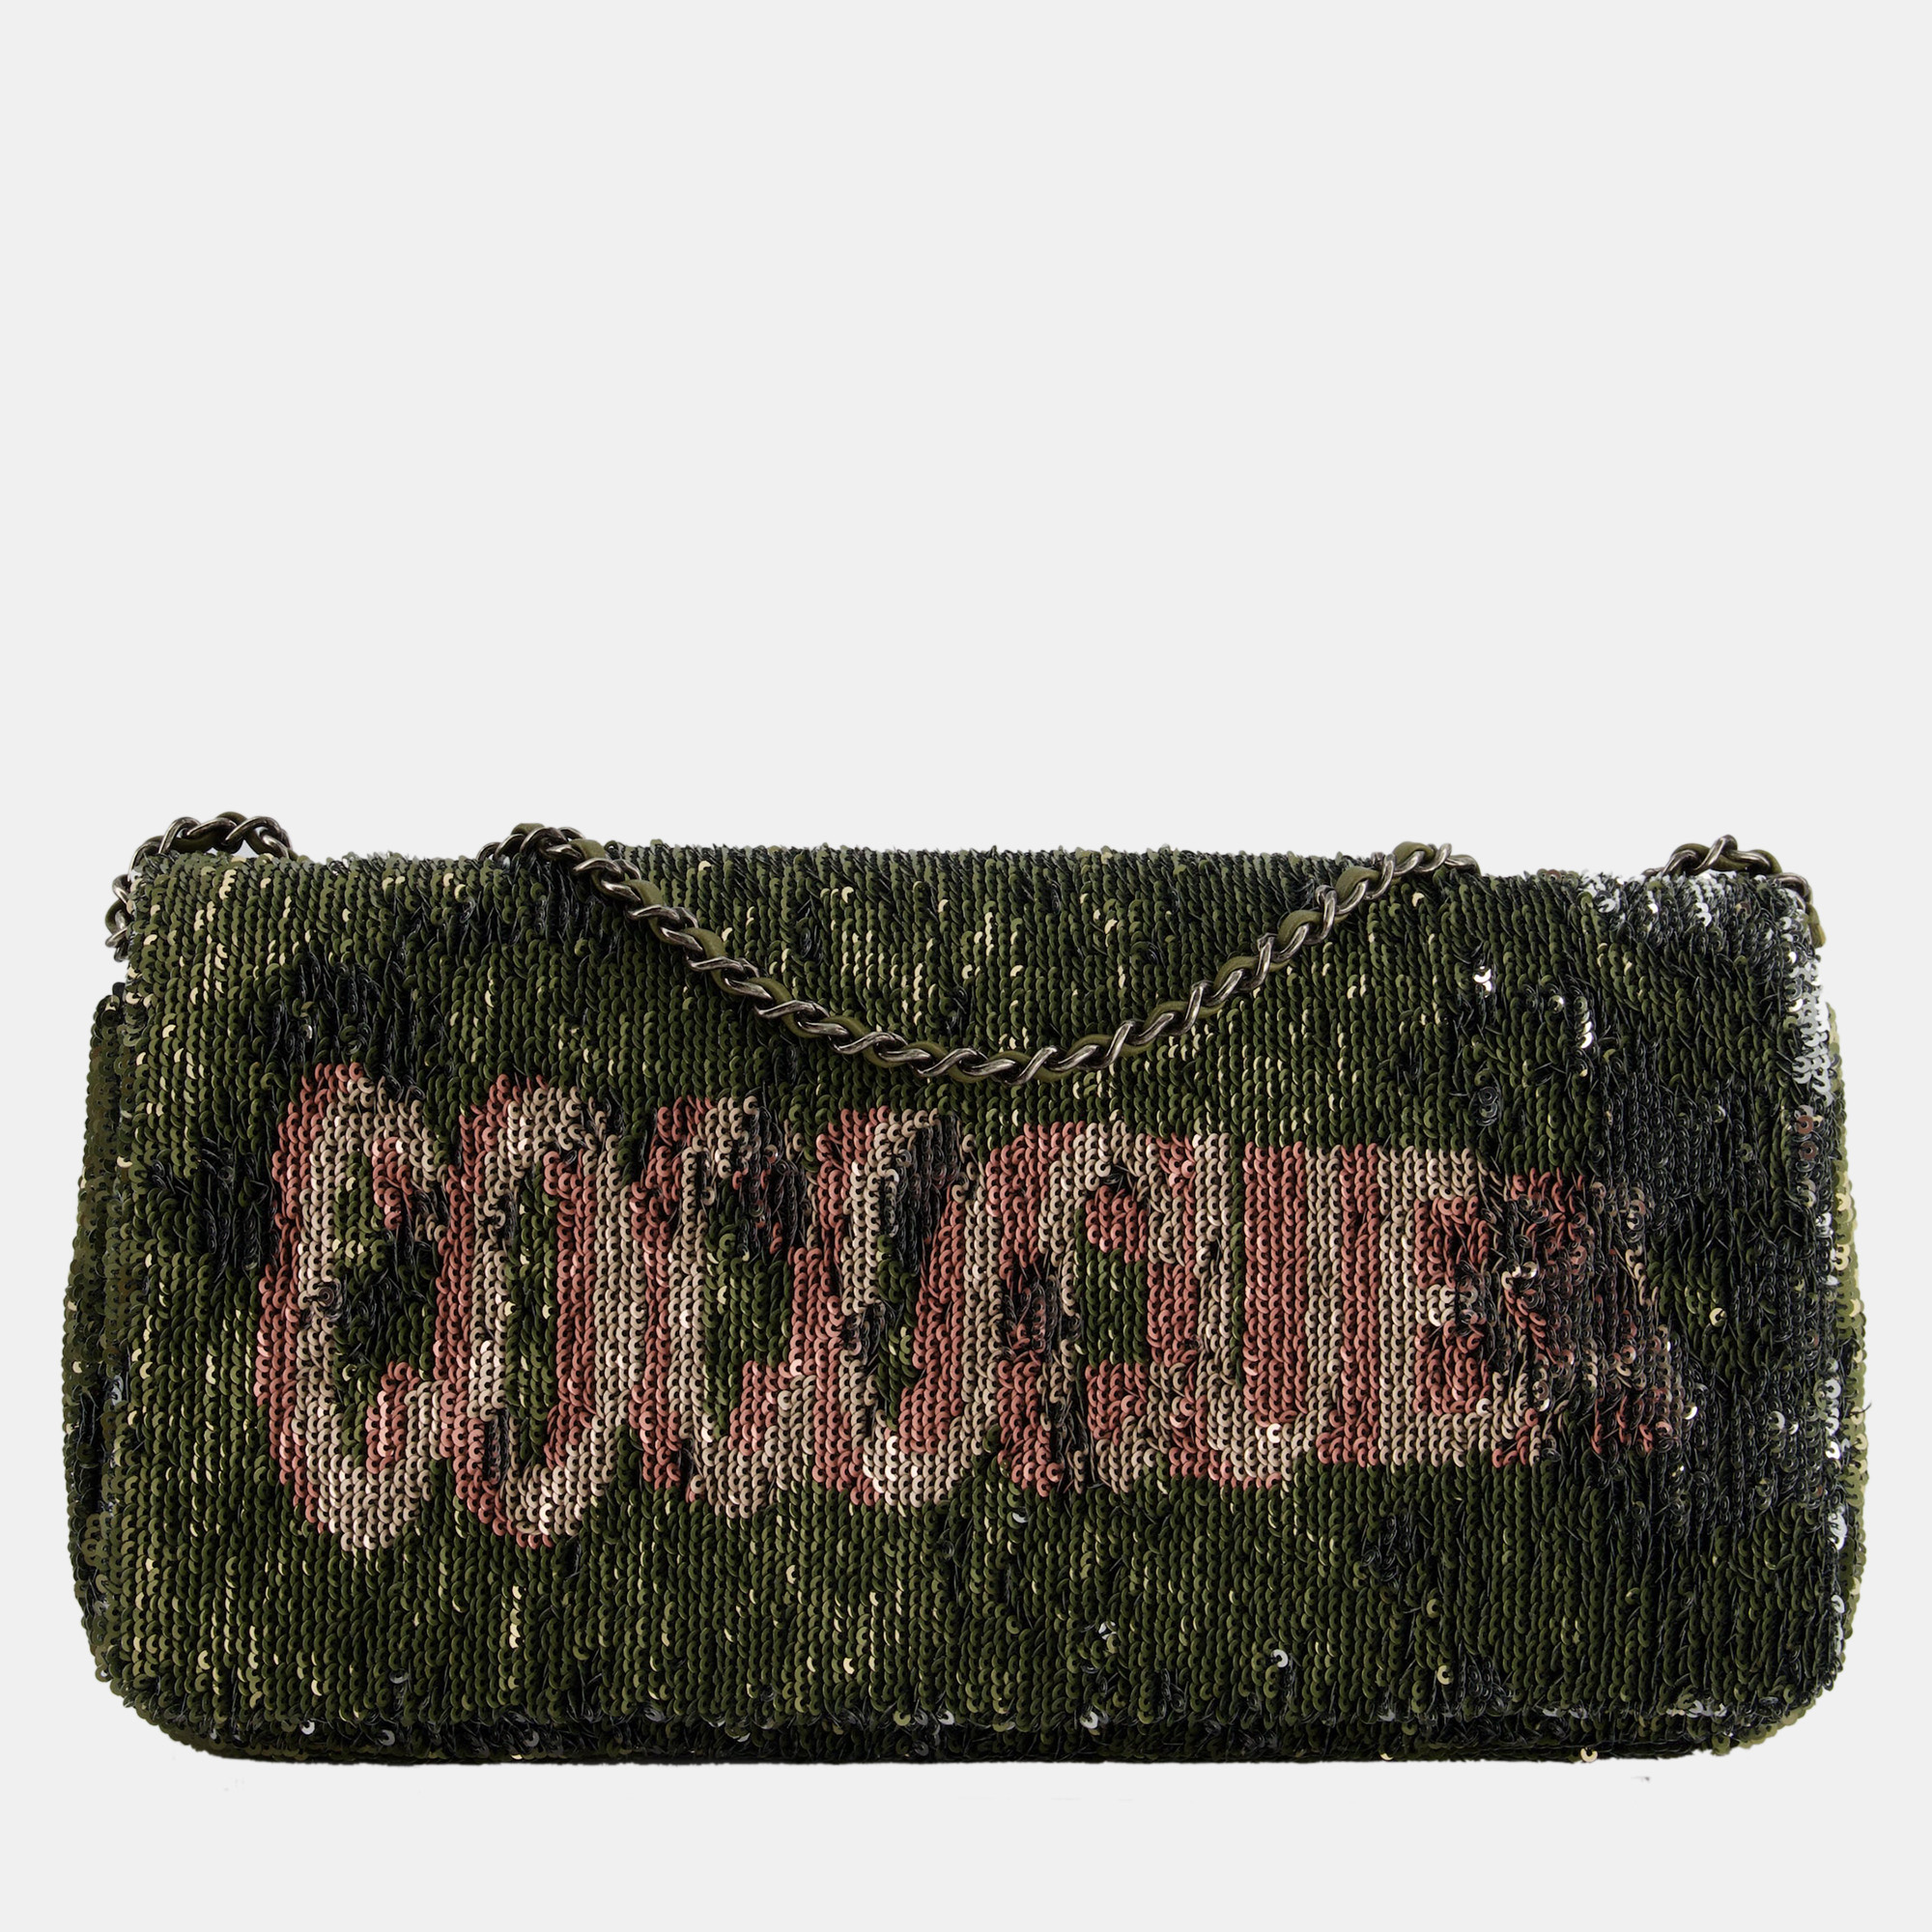 Chanel limited edition khaki sequin coco cuba bag